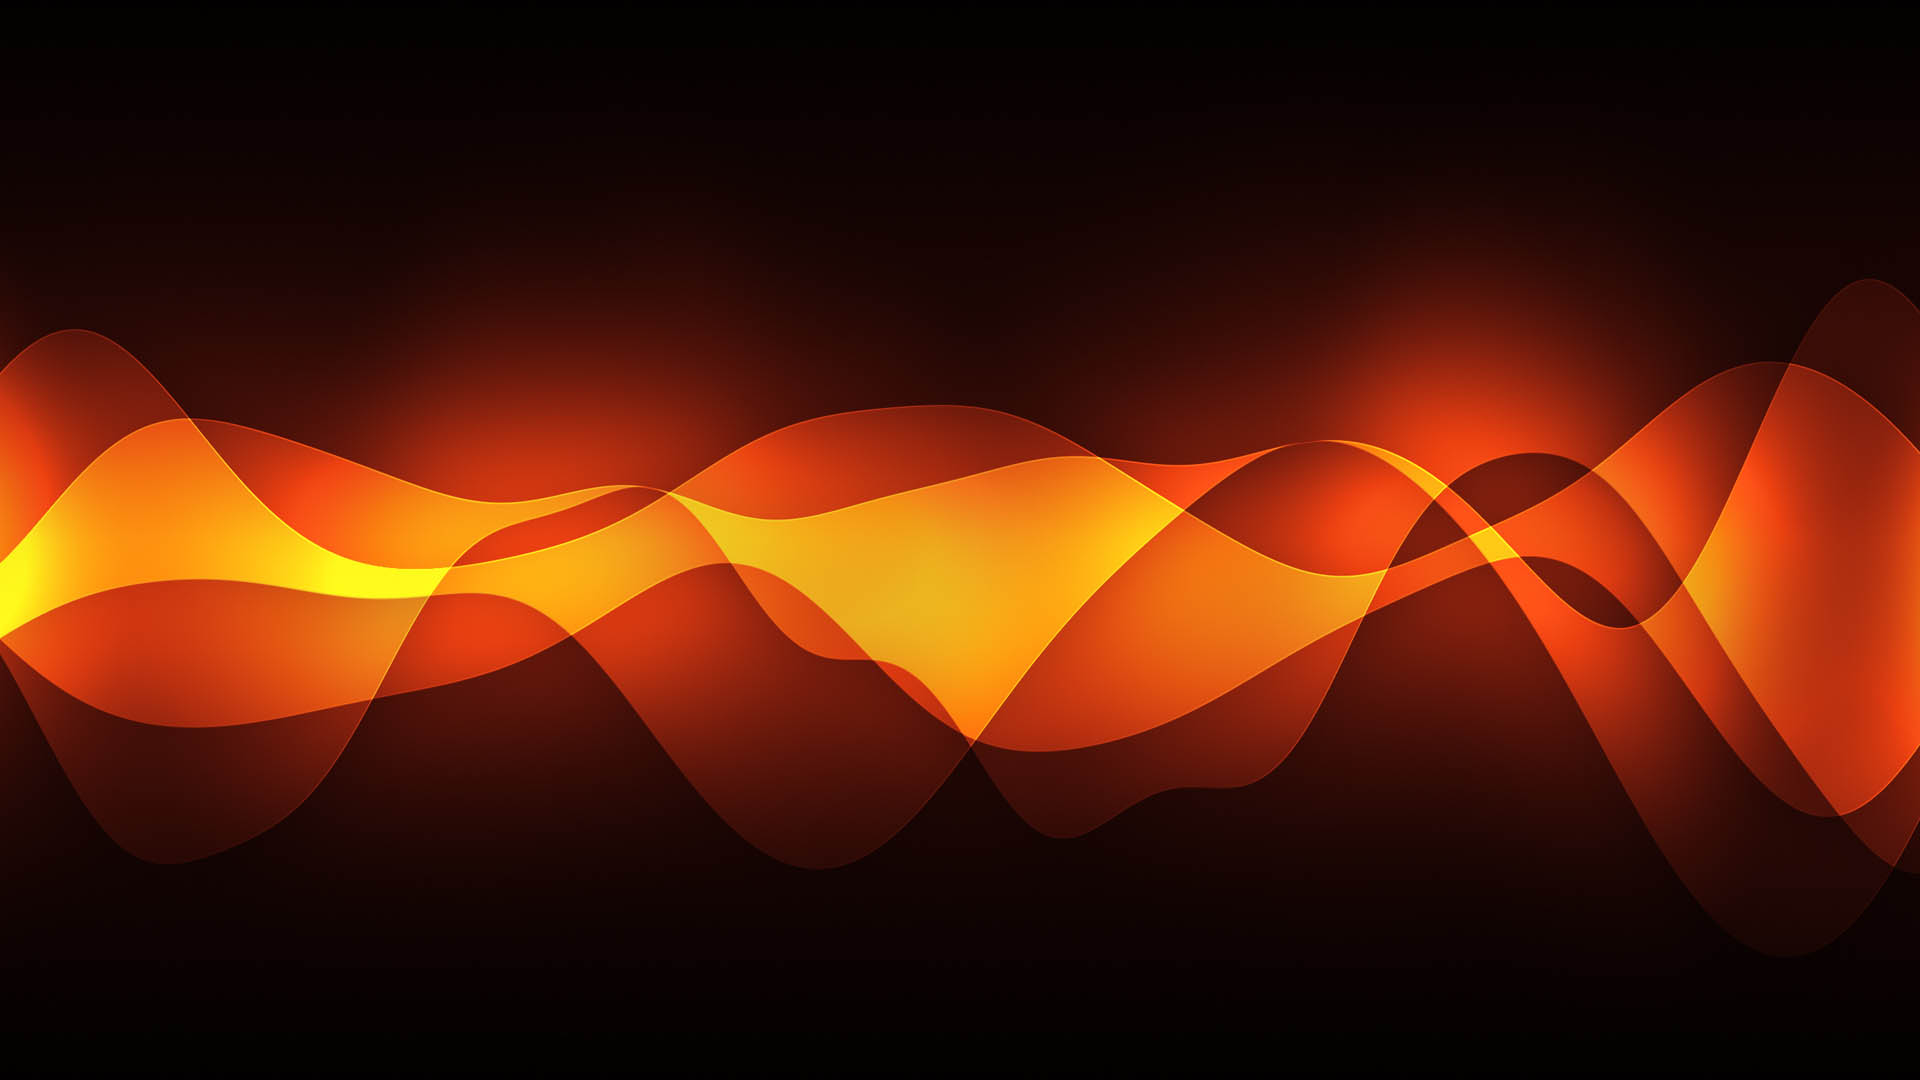 HD wallpaper: Abstract, Orange, Background, orange and black